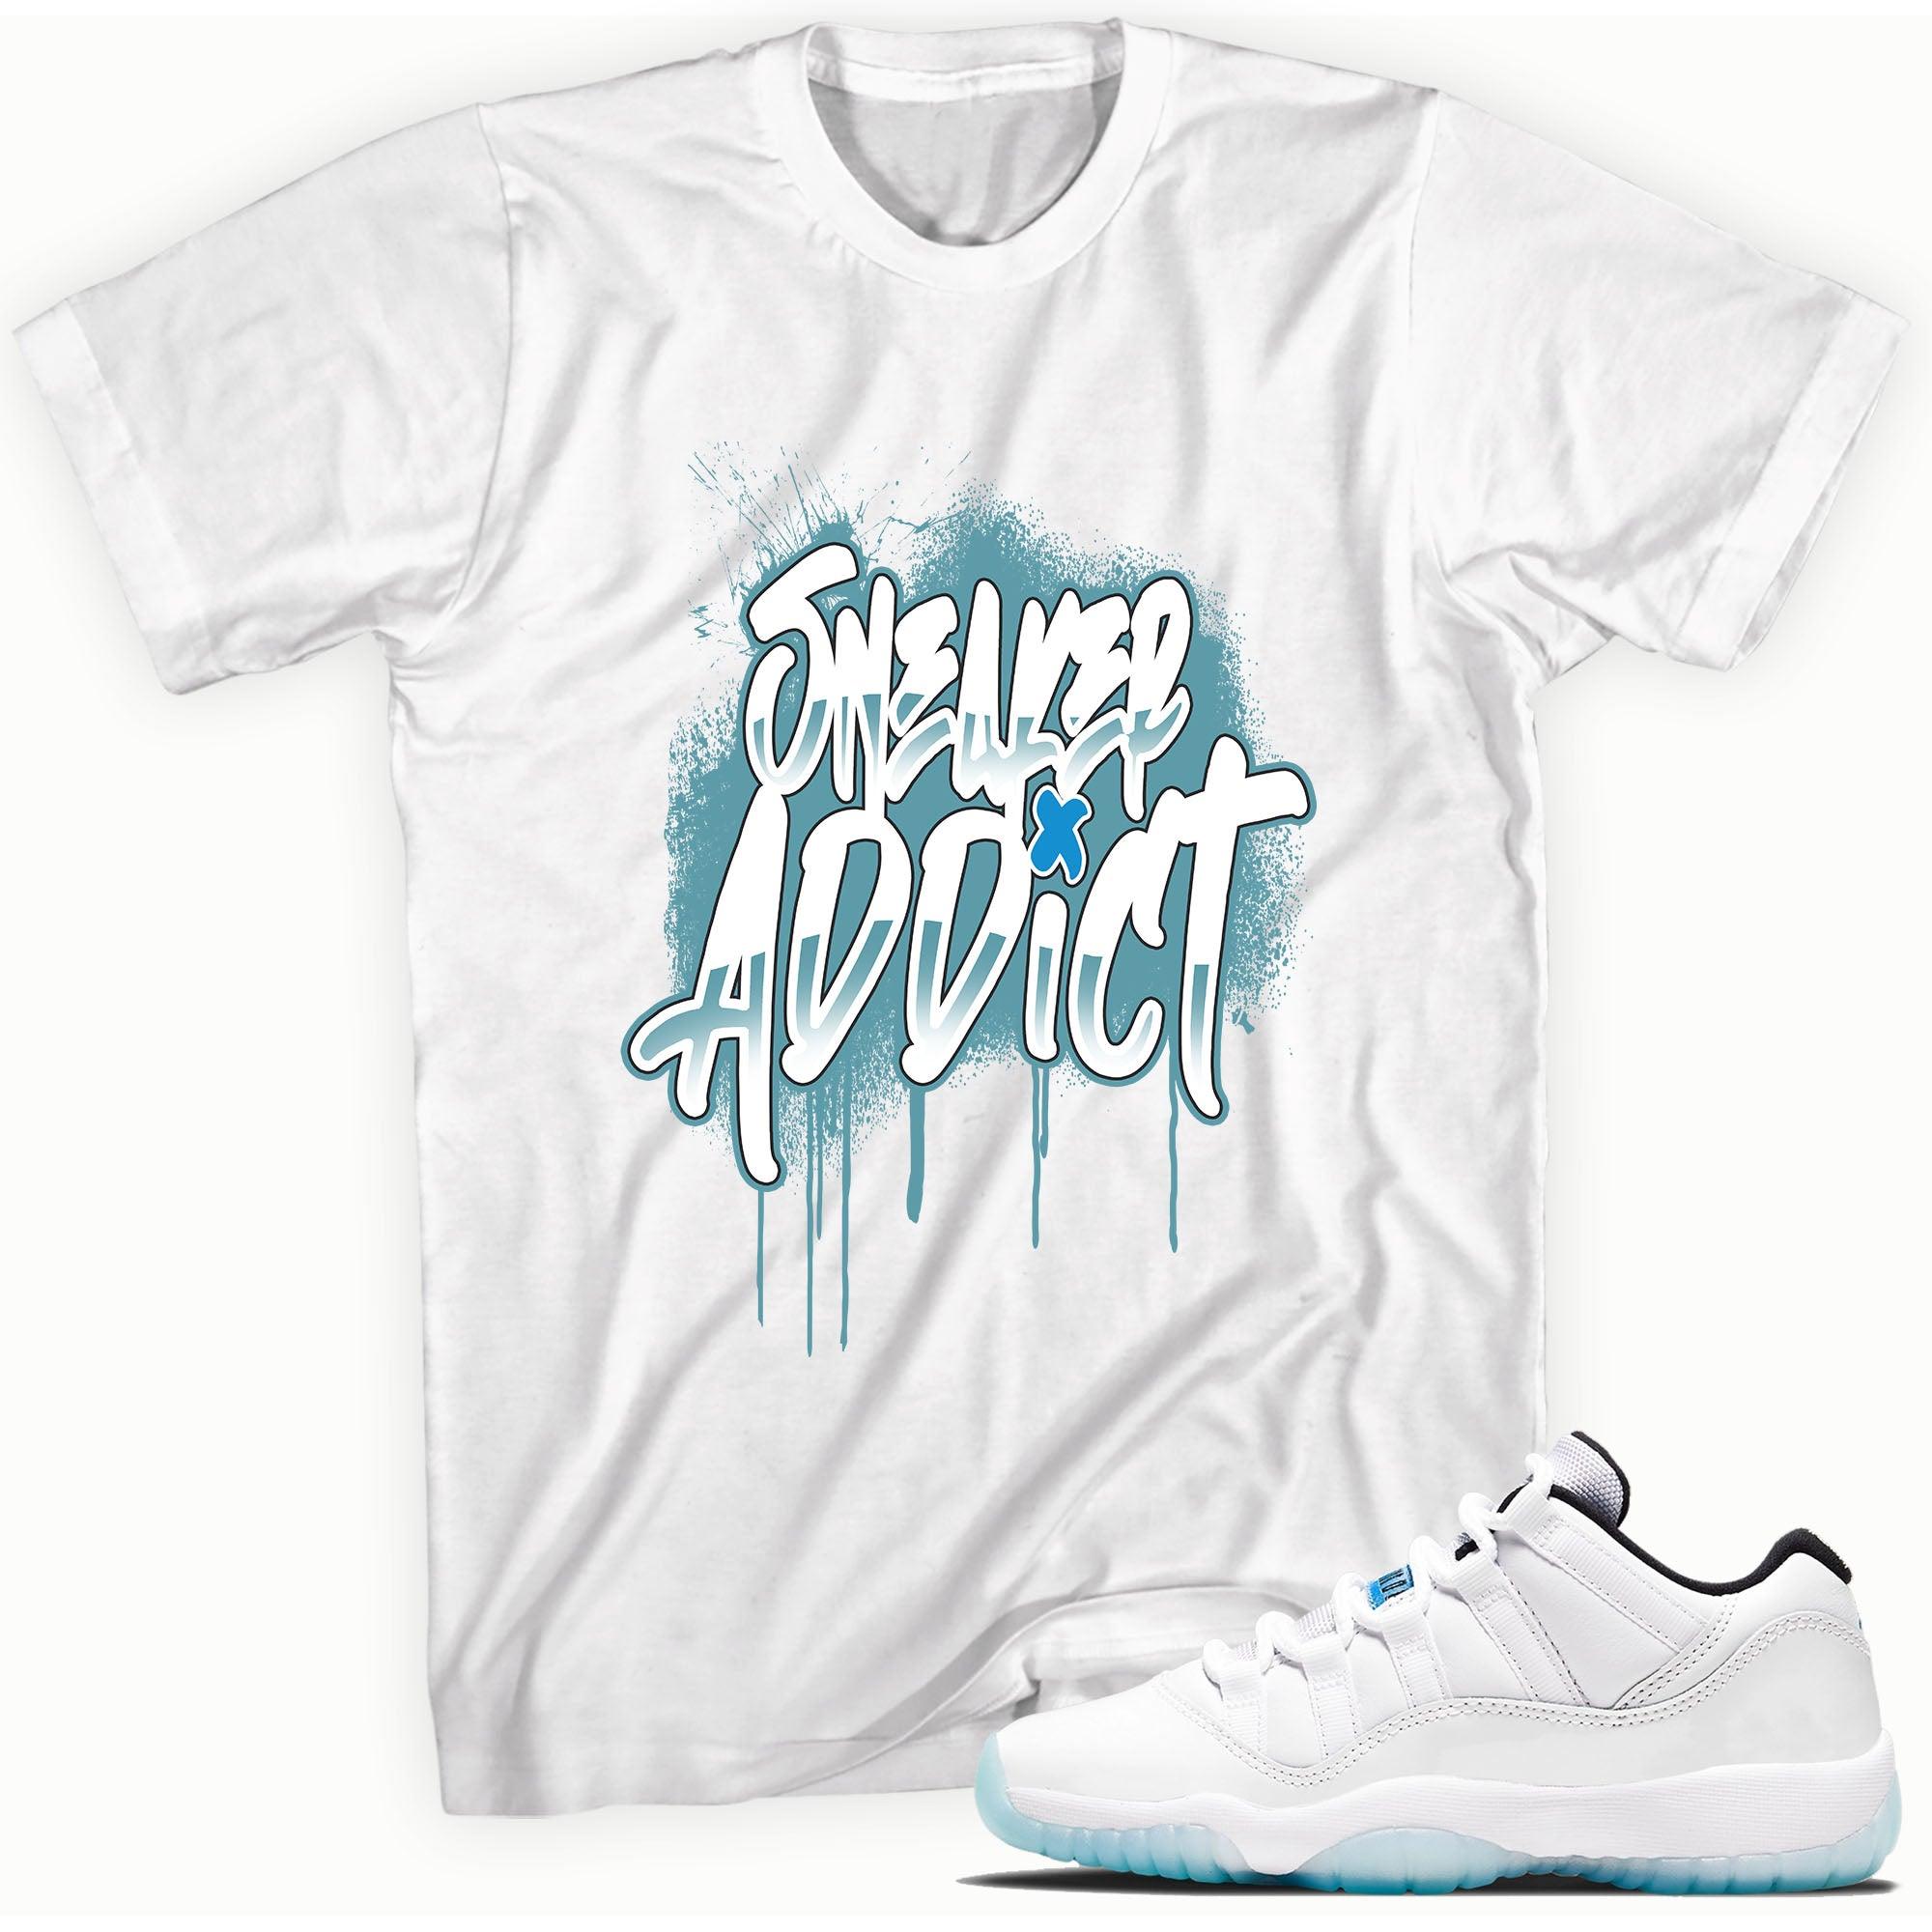 Sneaker Addict Shirt AJ 11s Retro Low Legend Blue photo